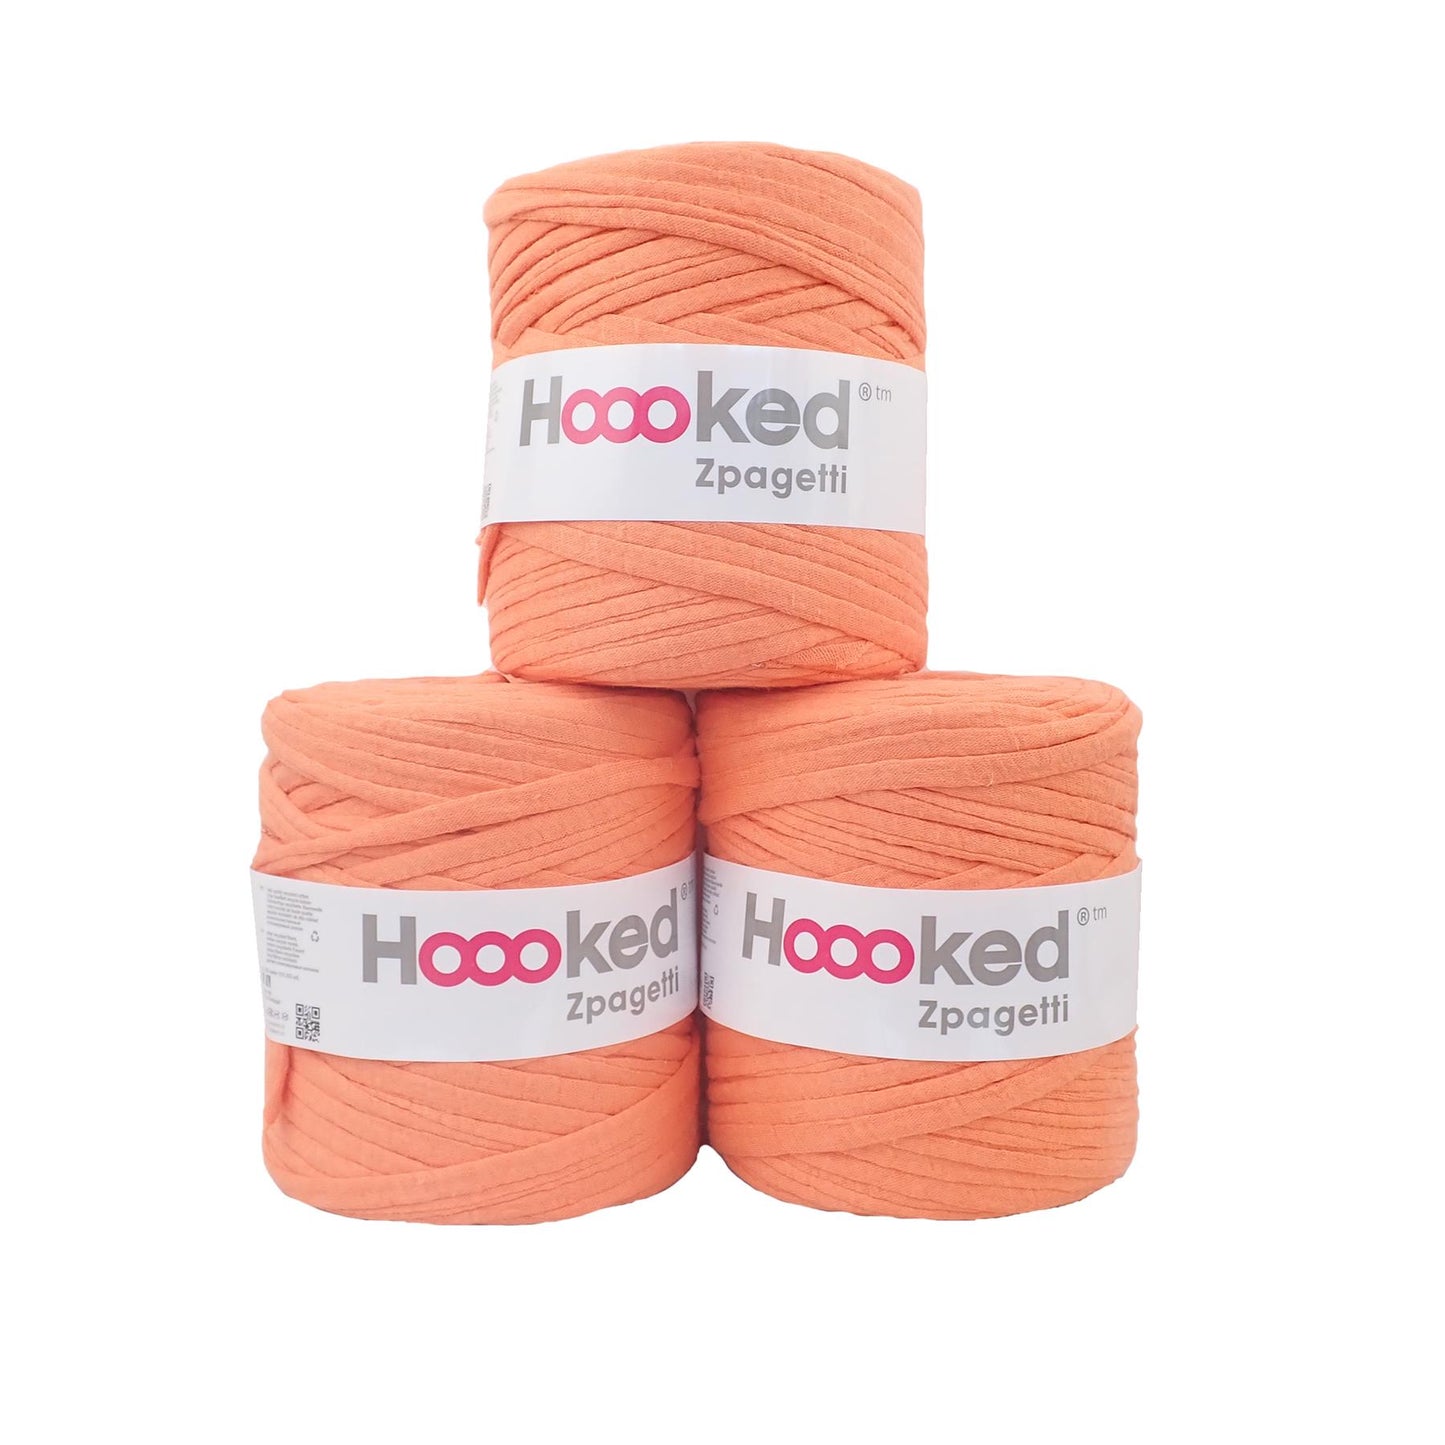 Hoooked Zpagetti Light Orange Cotton T-Shirt Yarn - 120M 700g (Pack of 3)